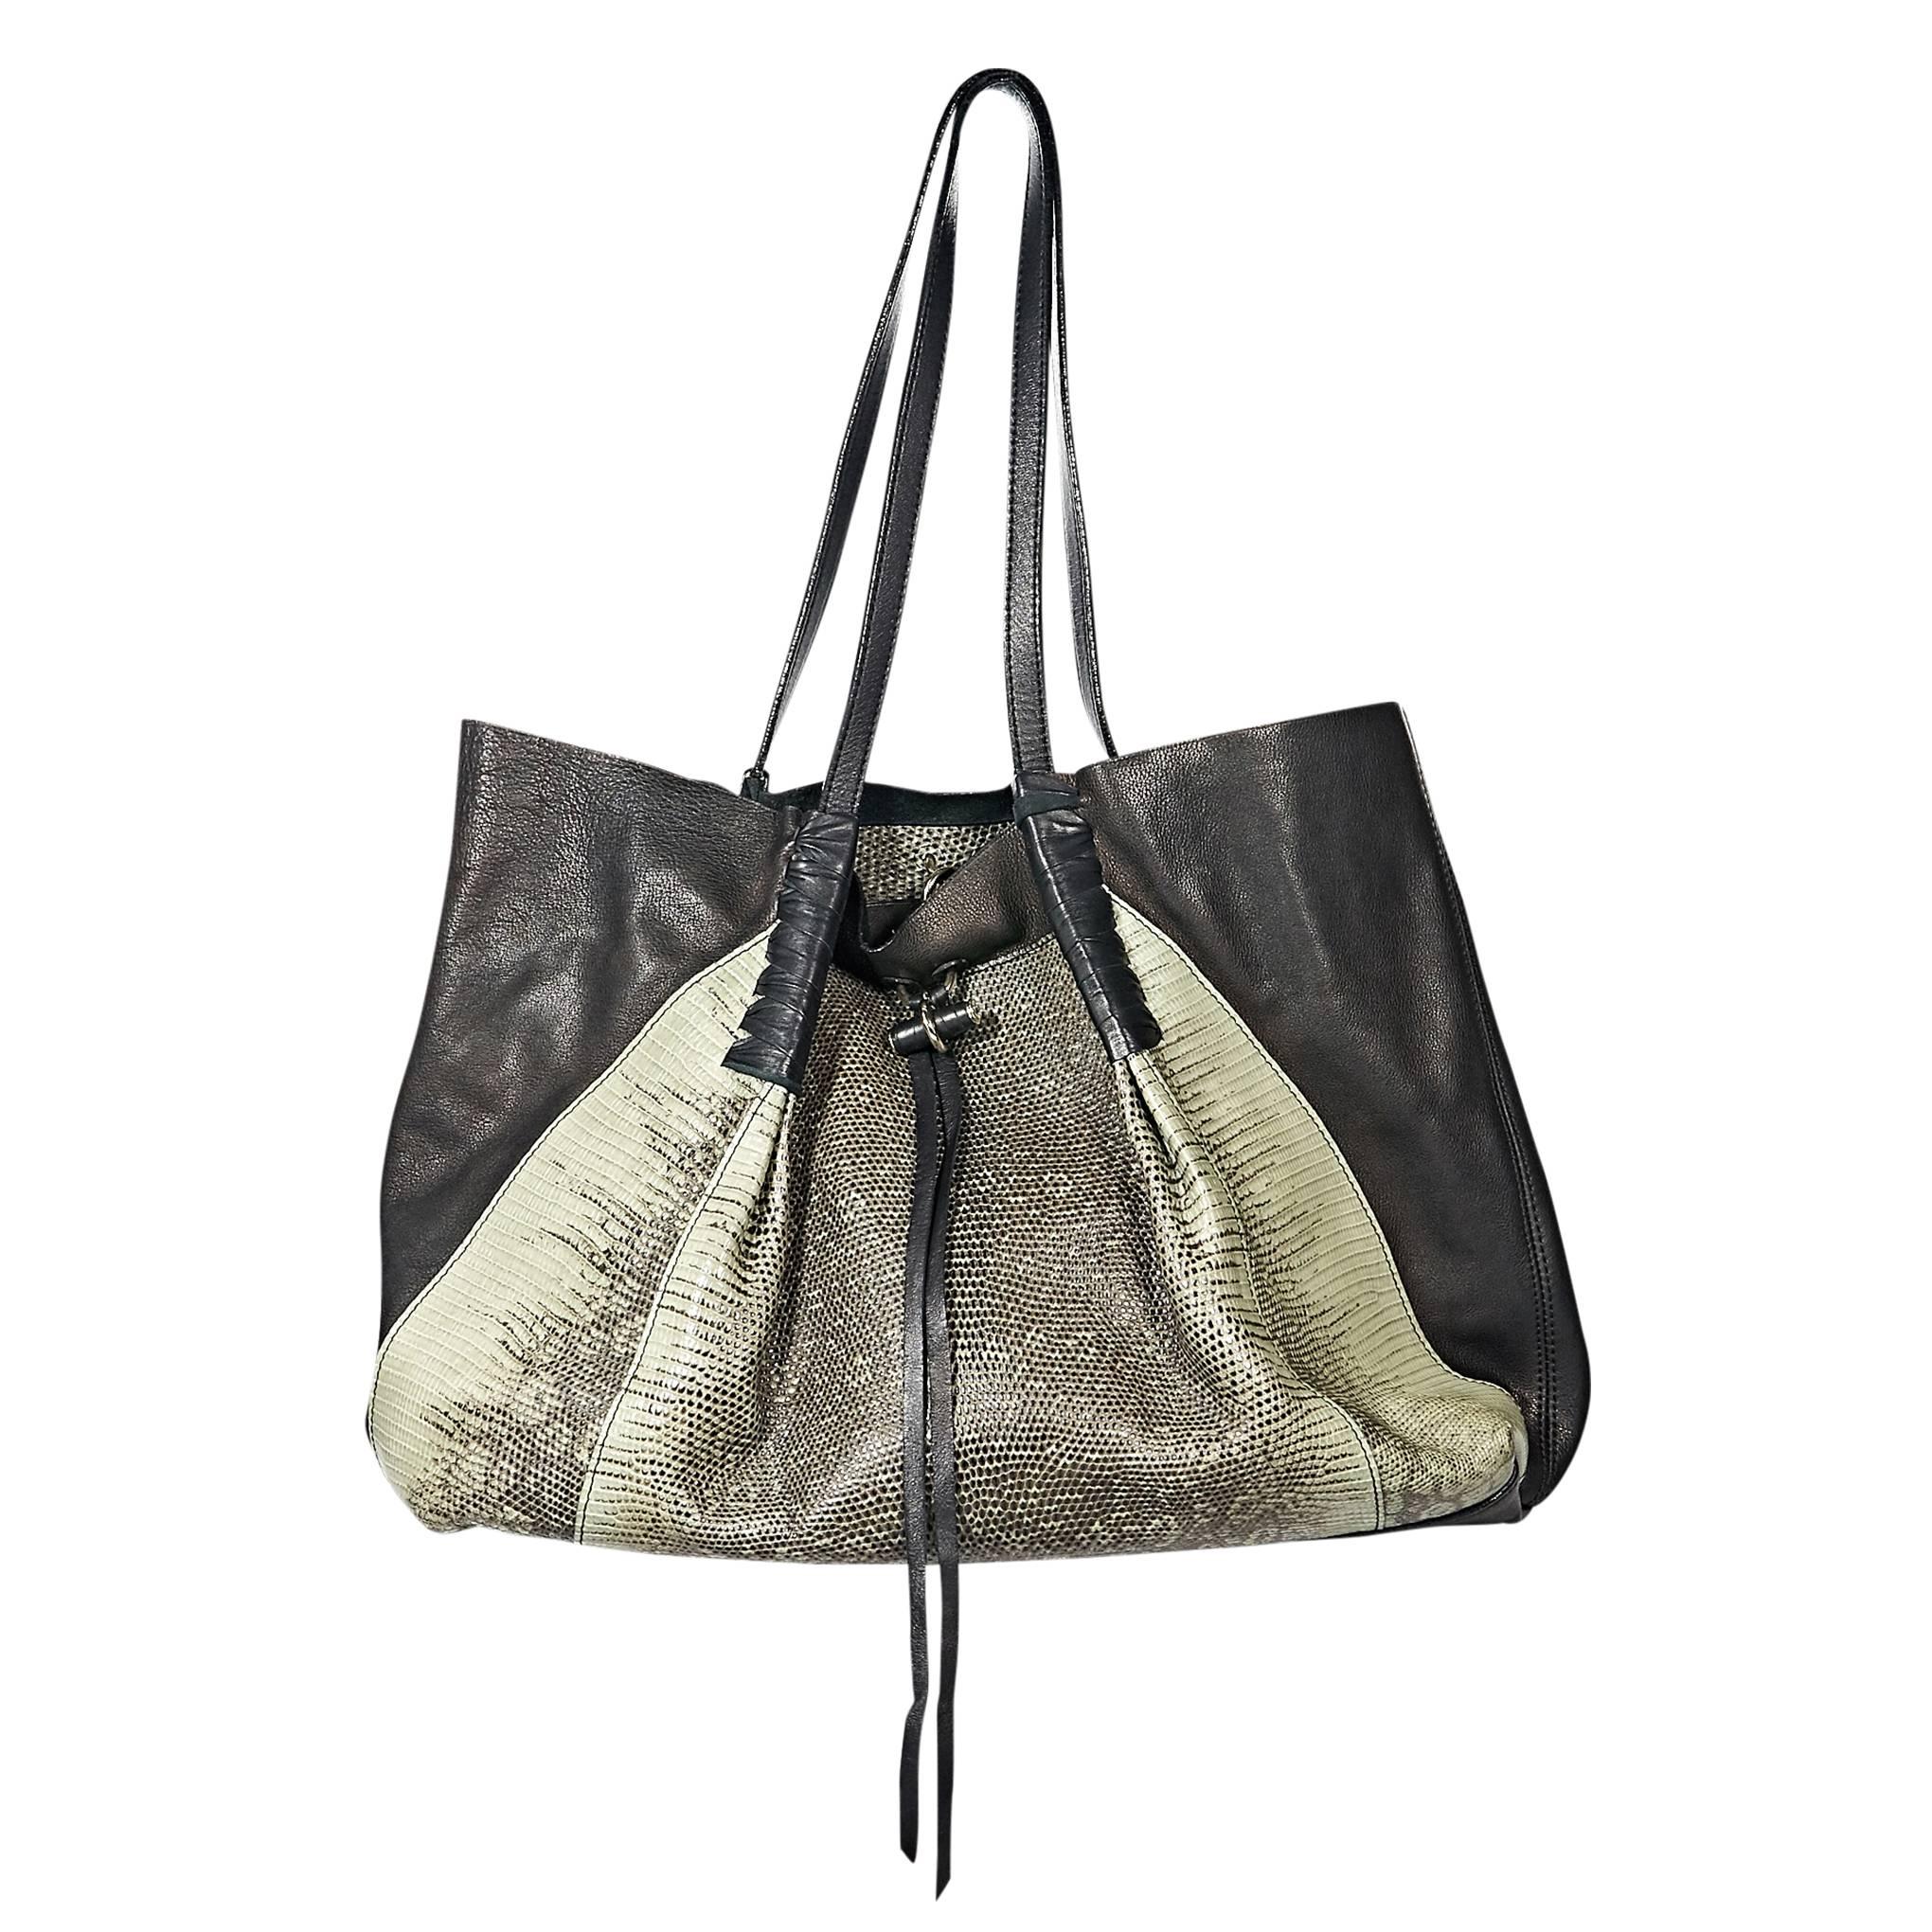 Black Nina Ricci Leather & Lizard Tote Bag